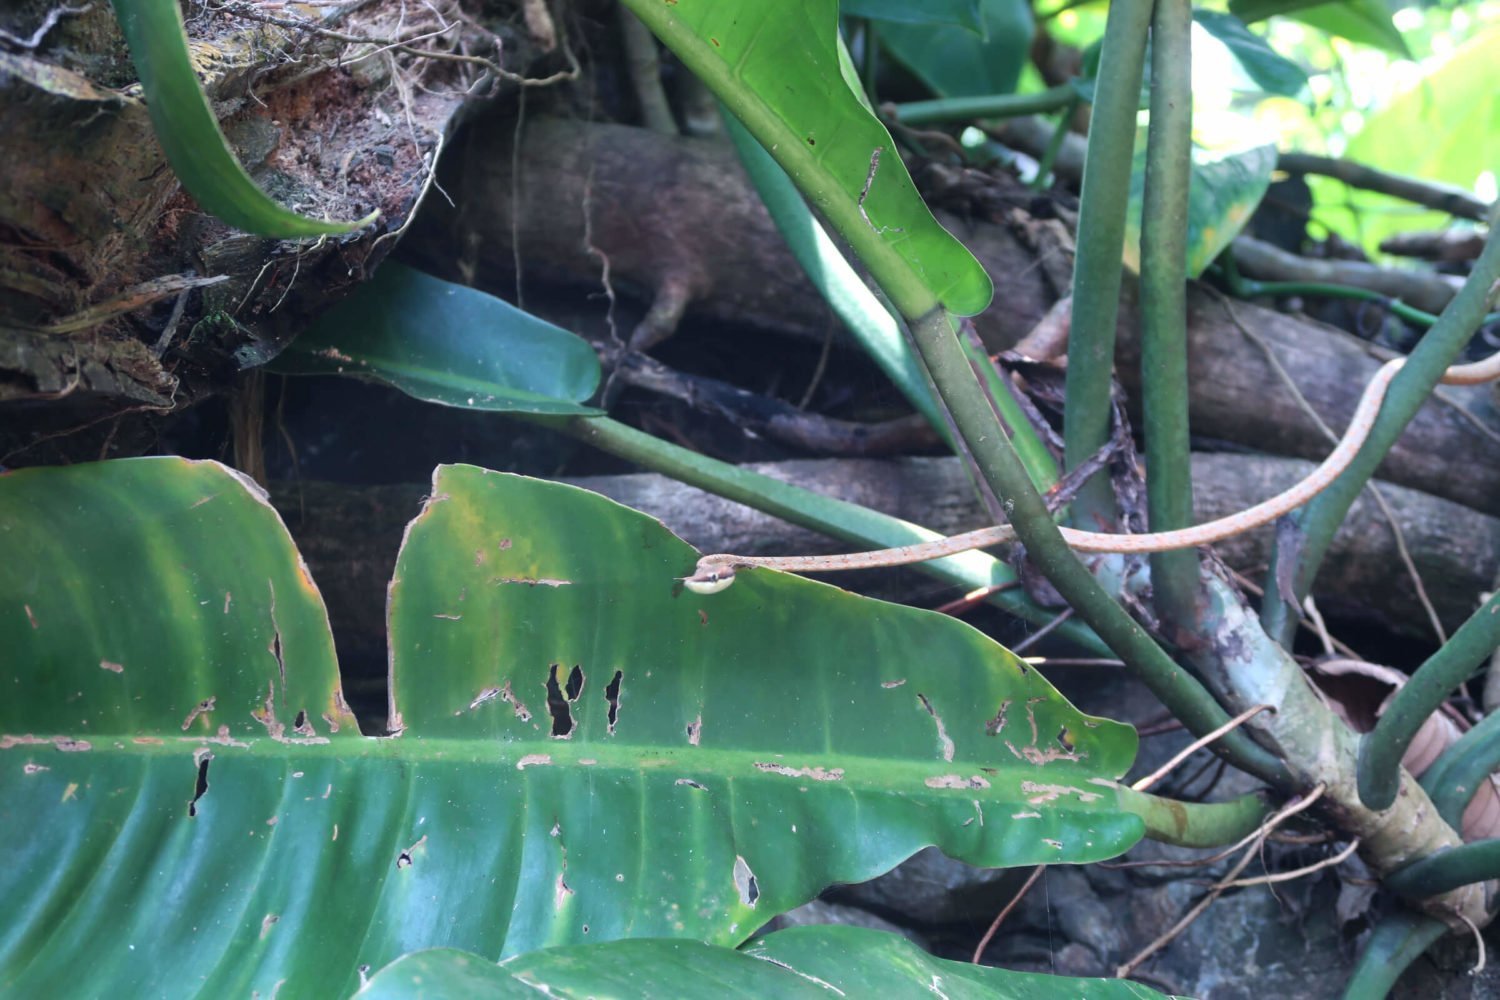 hidden snake winds himself around some tropical leaves playa el tigre bahia solano